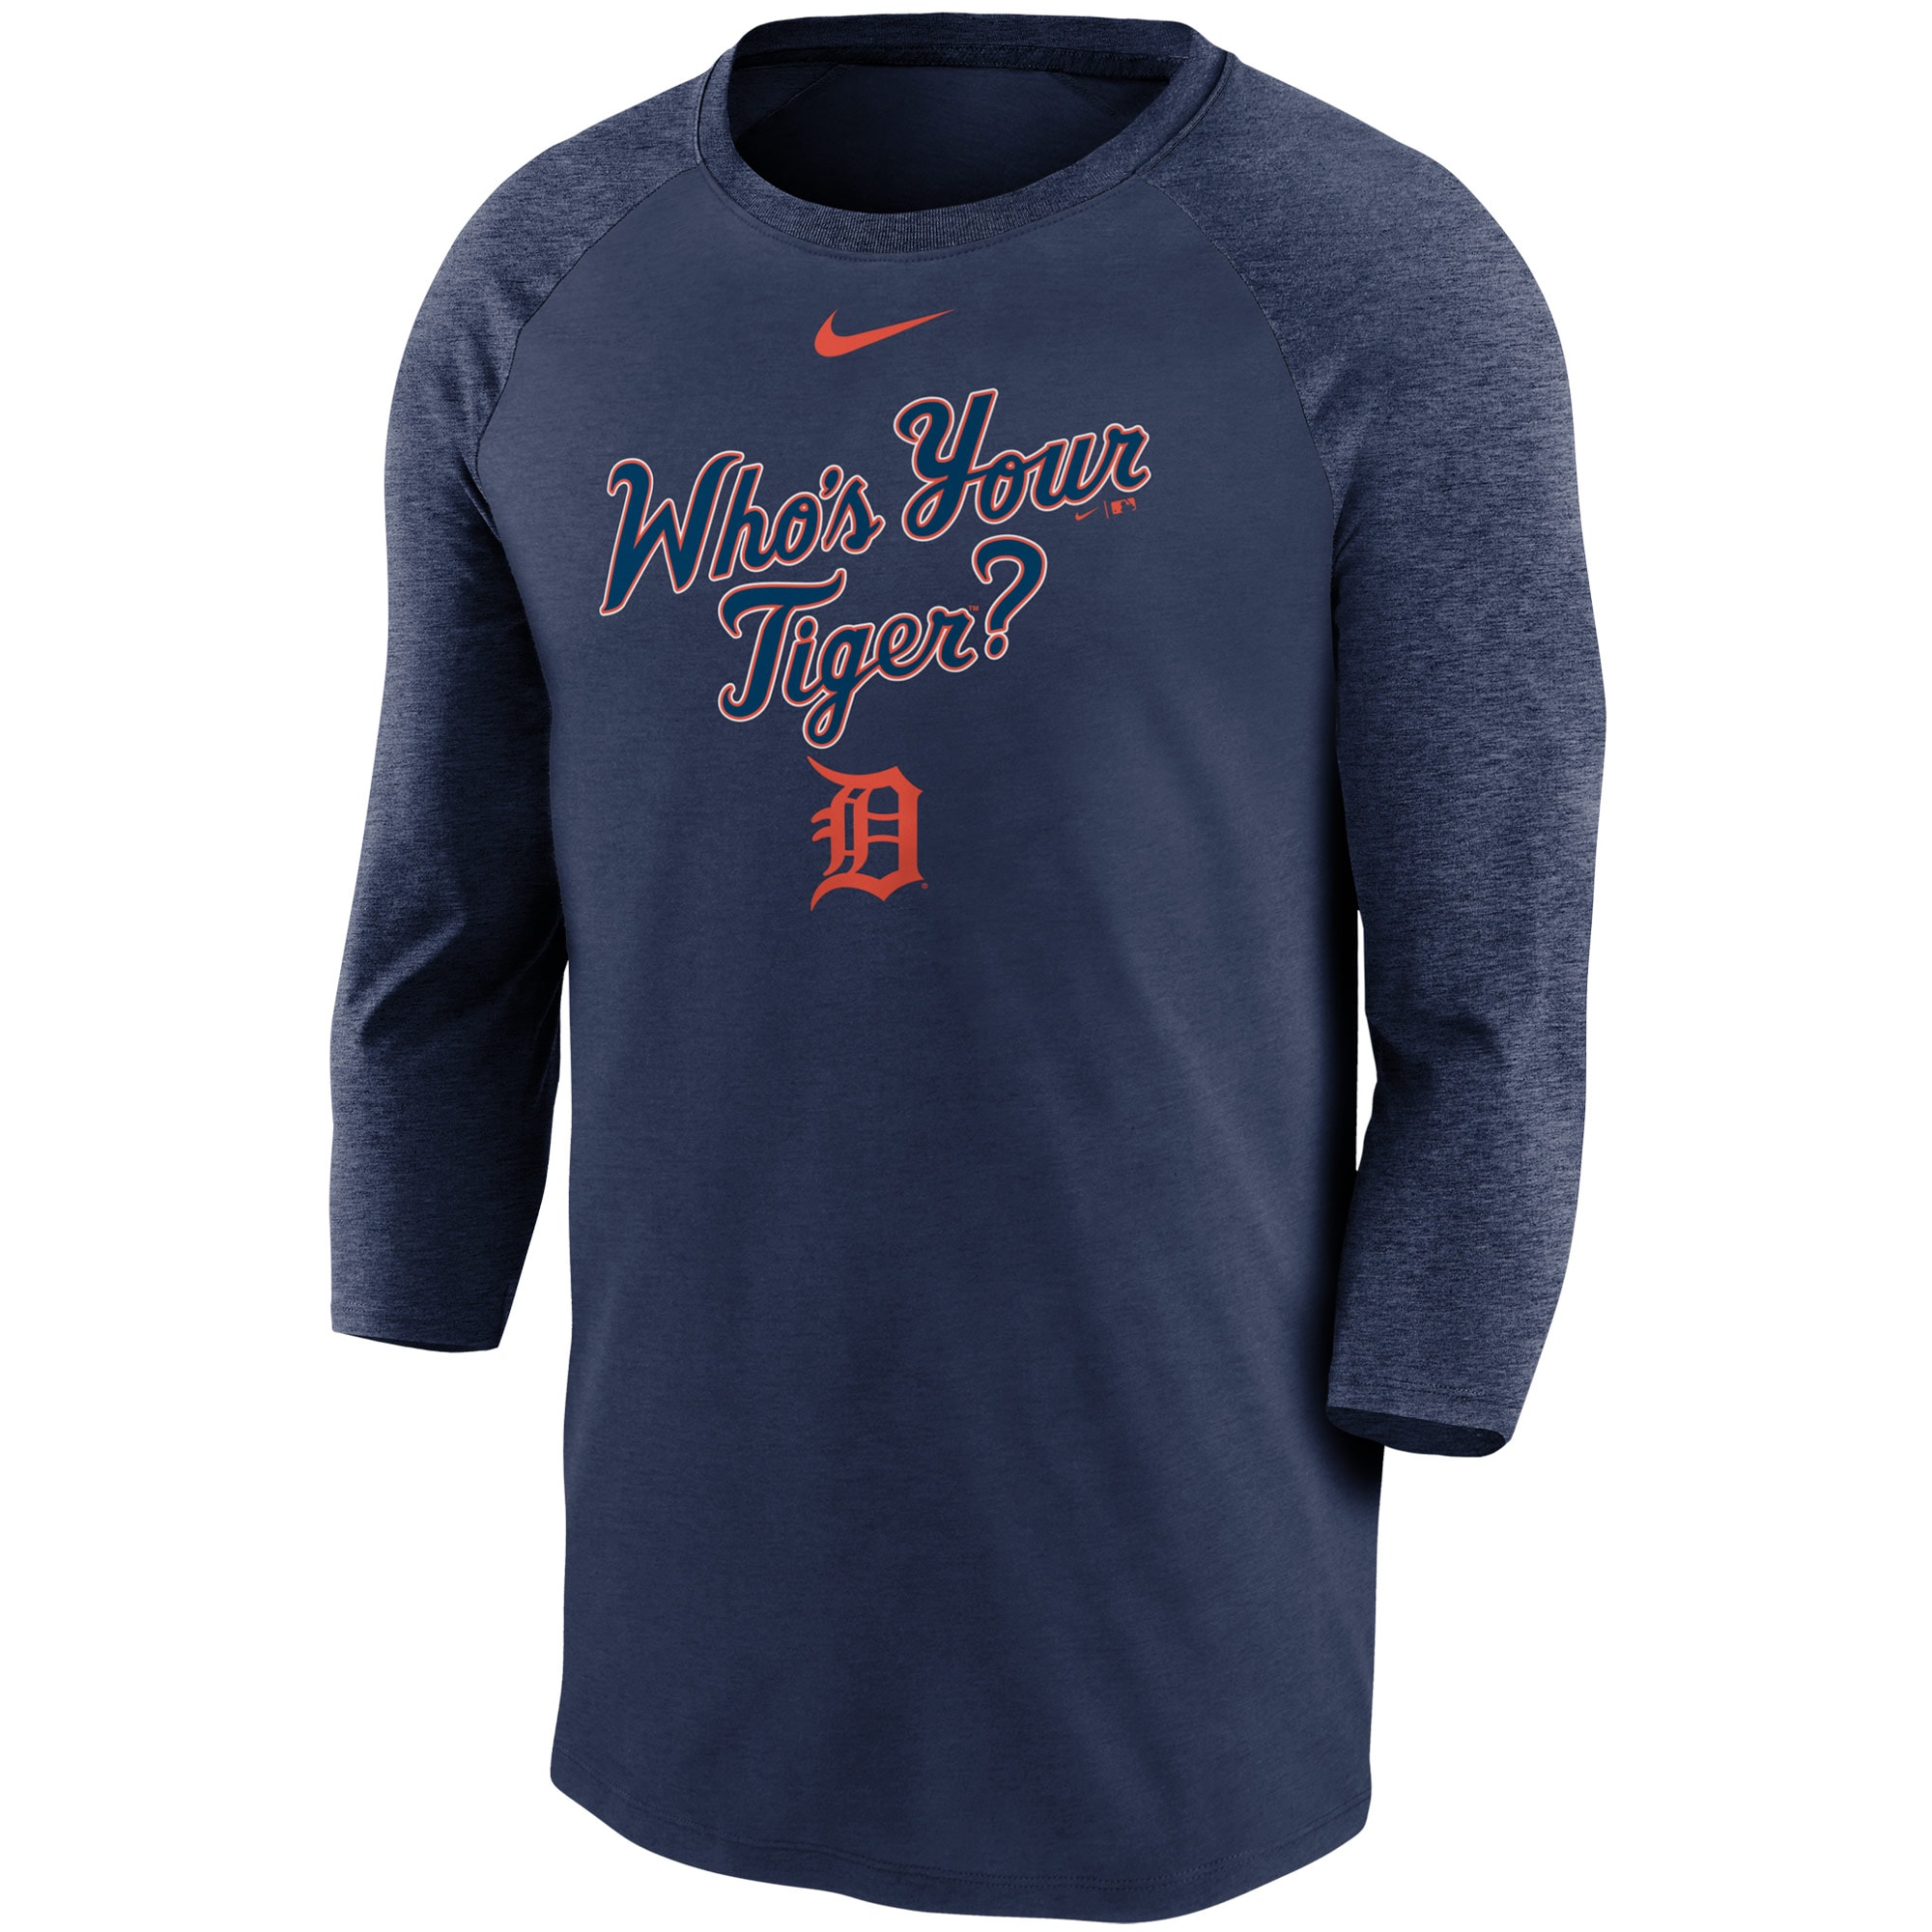 Men's Nike Navy Detroit Tigers Local Phrase Tri-Blend 3/4-Sleeve Raglan T-Shirt - image 2 of 3